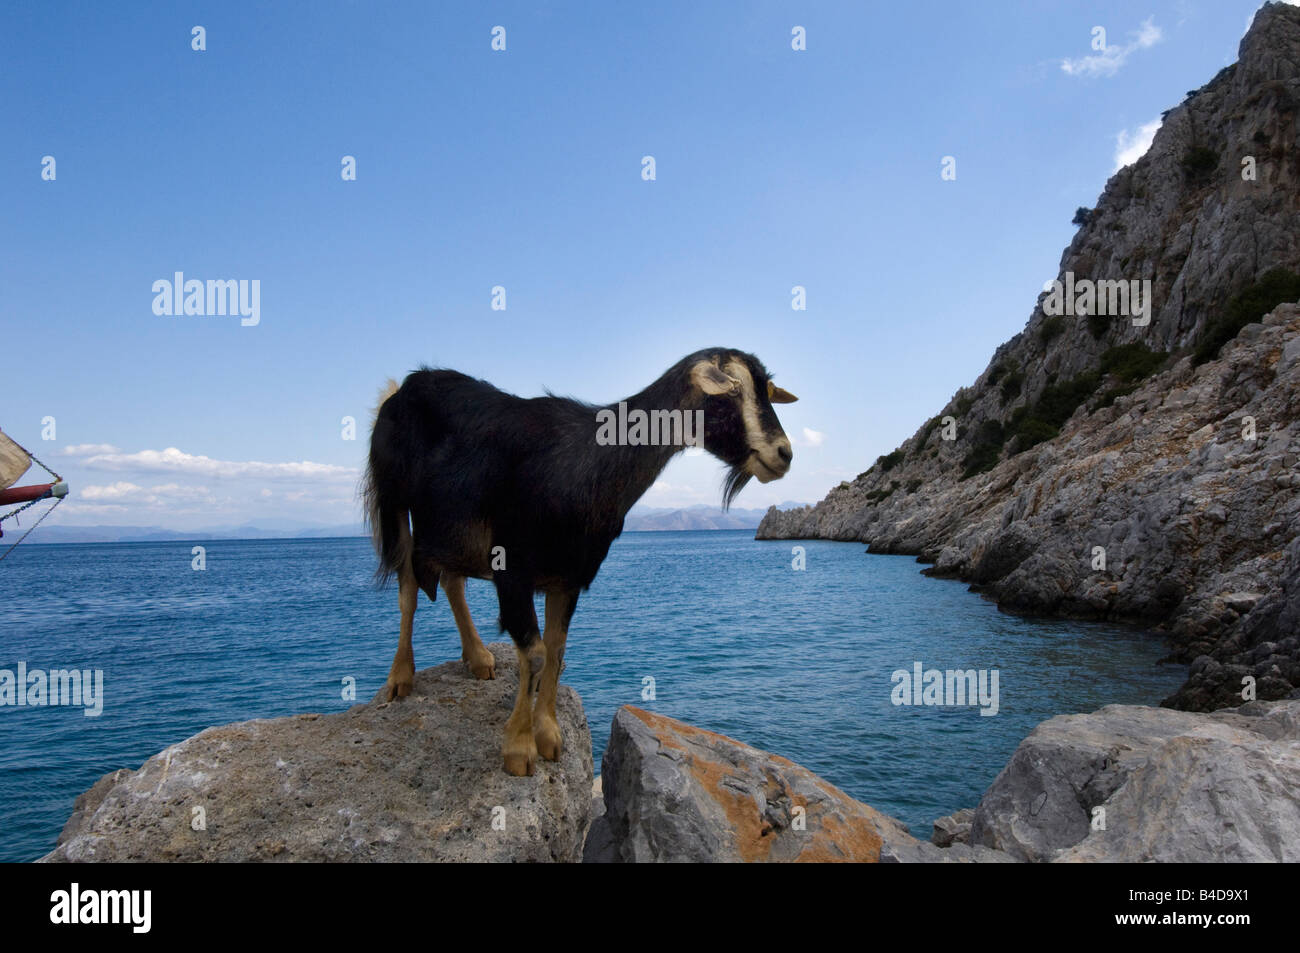 A female mountain goat climbs rocks on the Greek island of Symi or Simi Greece Stock Photo